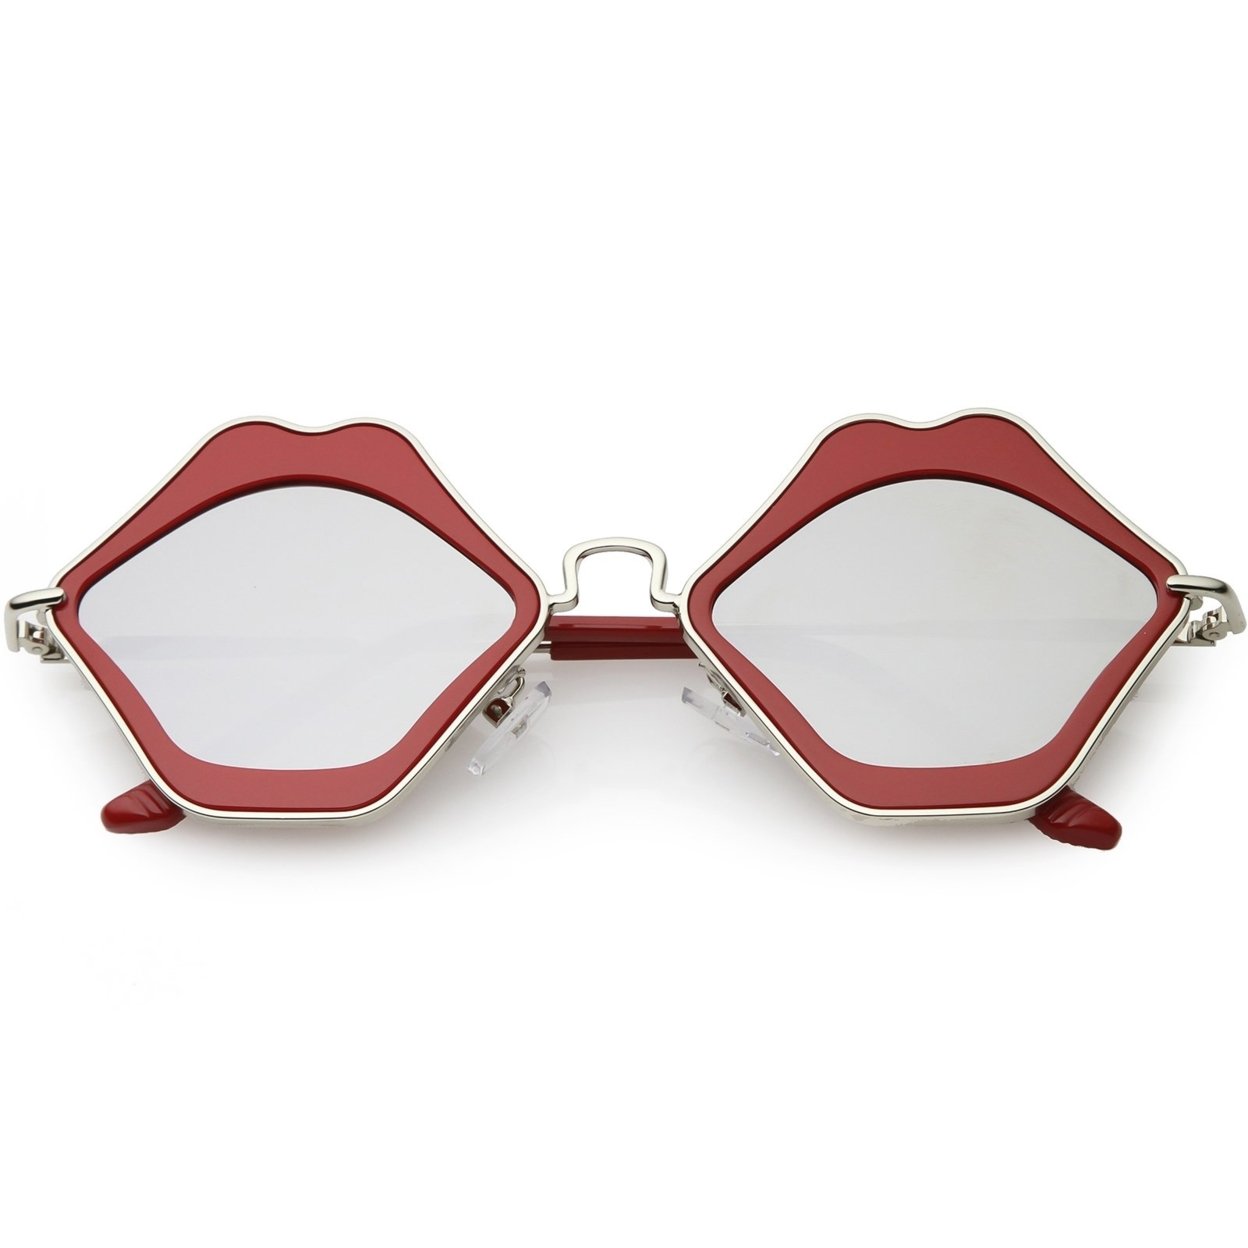 Oversize Lips Sunglasses Slim Arms Flat Mirrored Lens Lips Sunglasses 53mm - Black / Silver Mirror